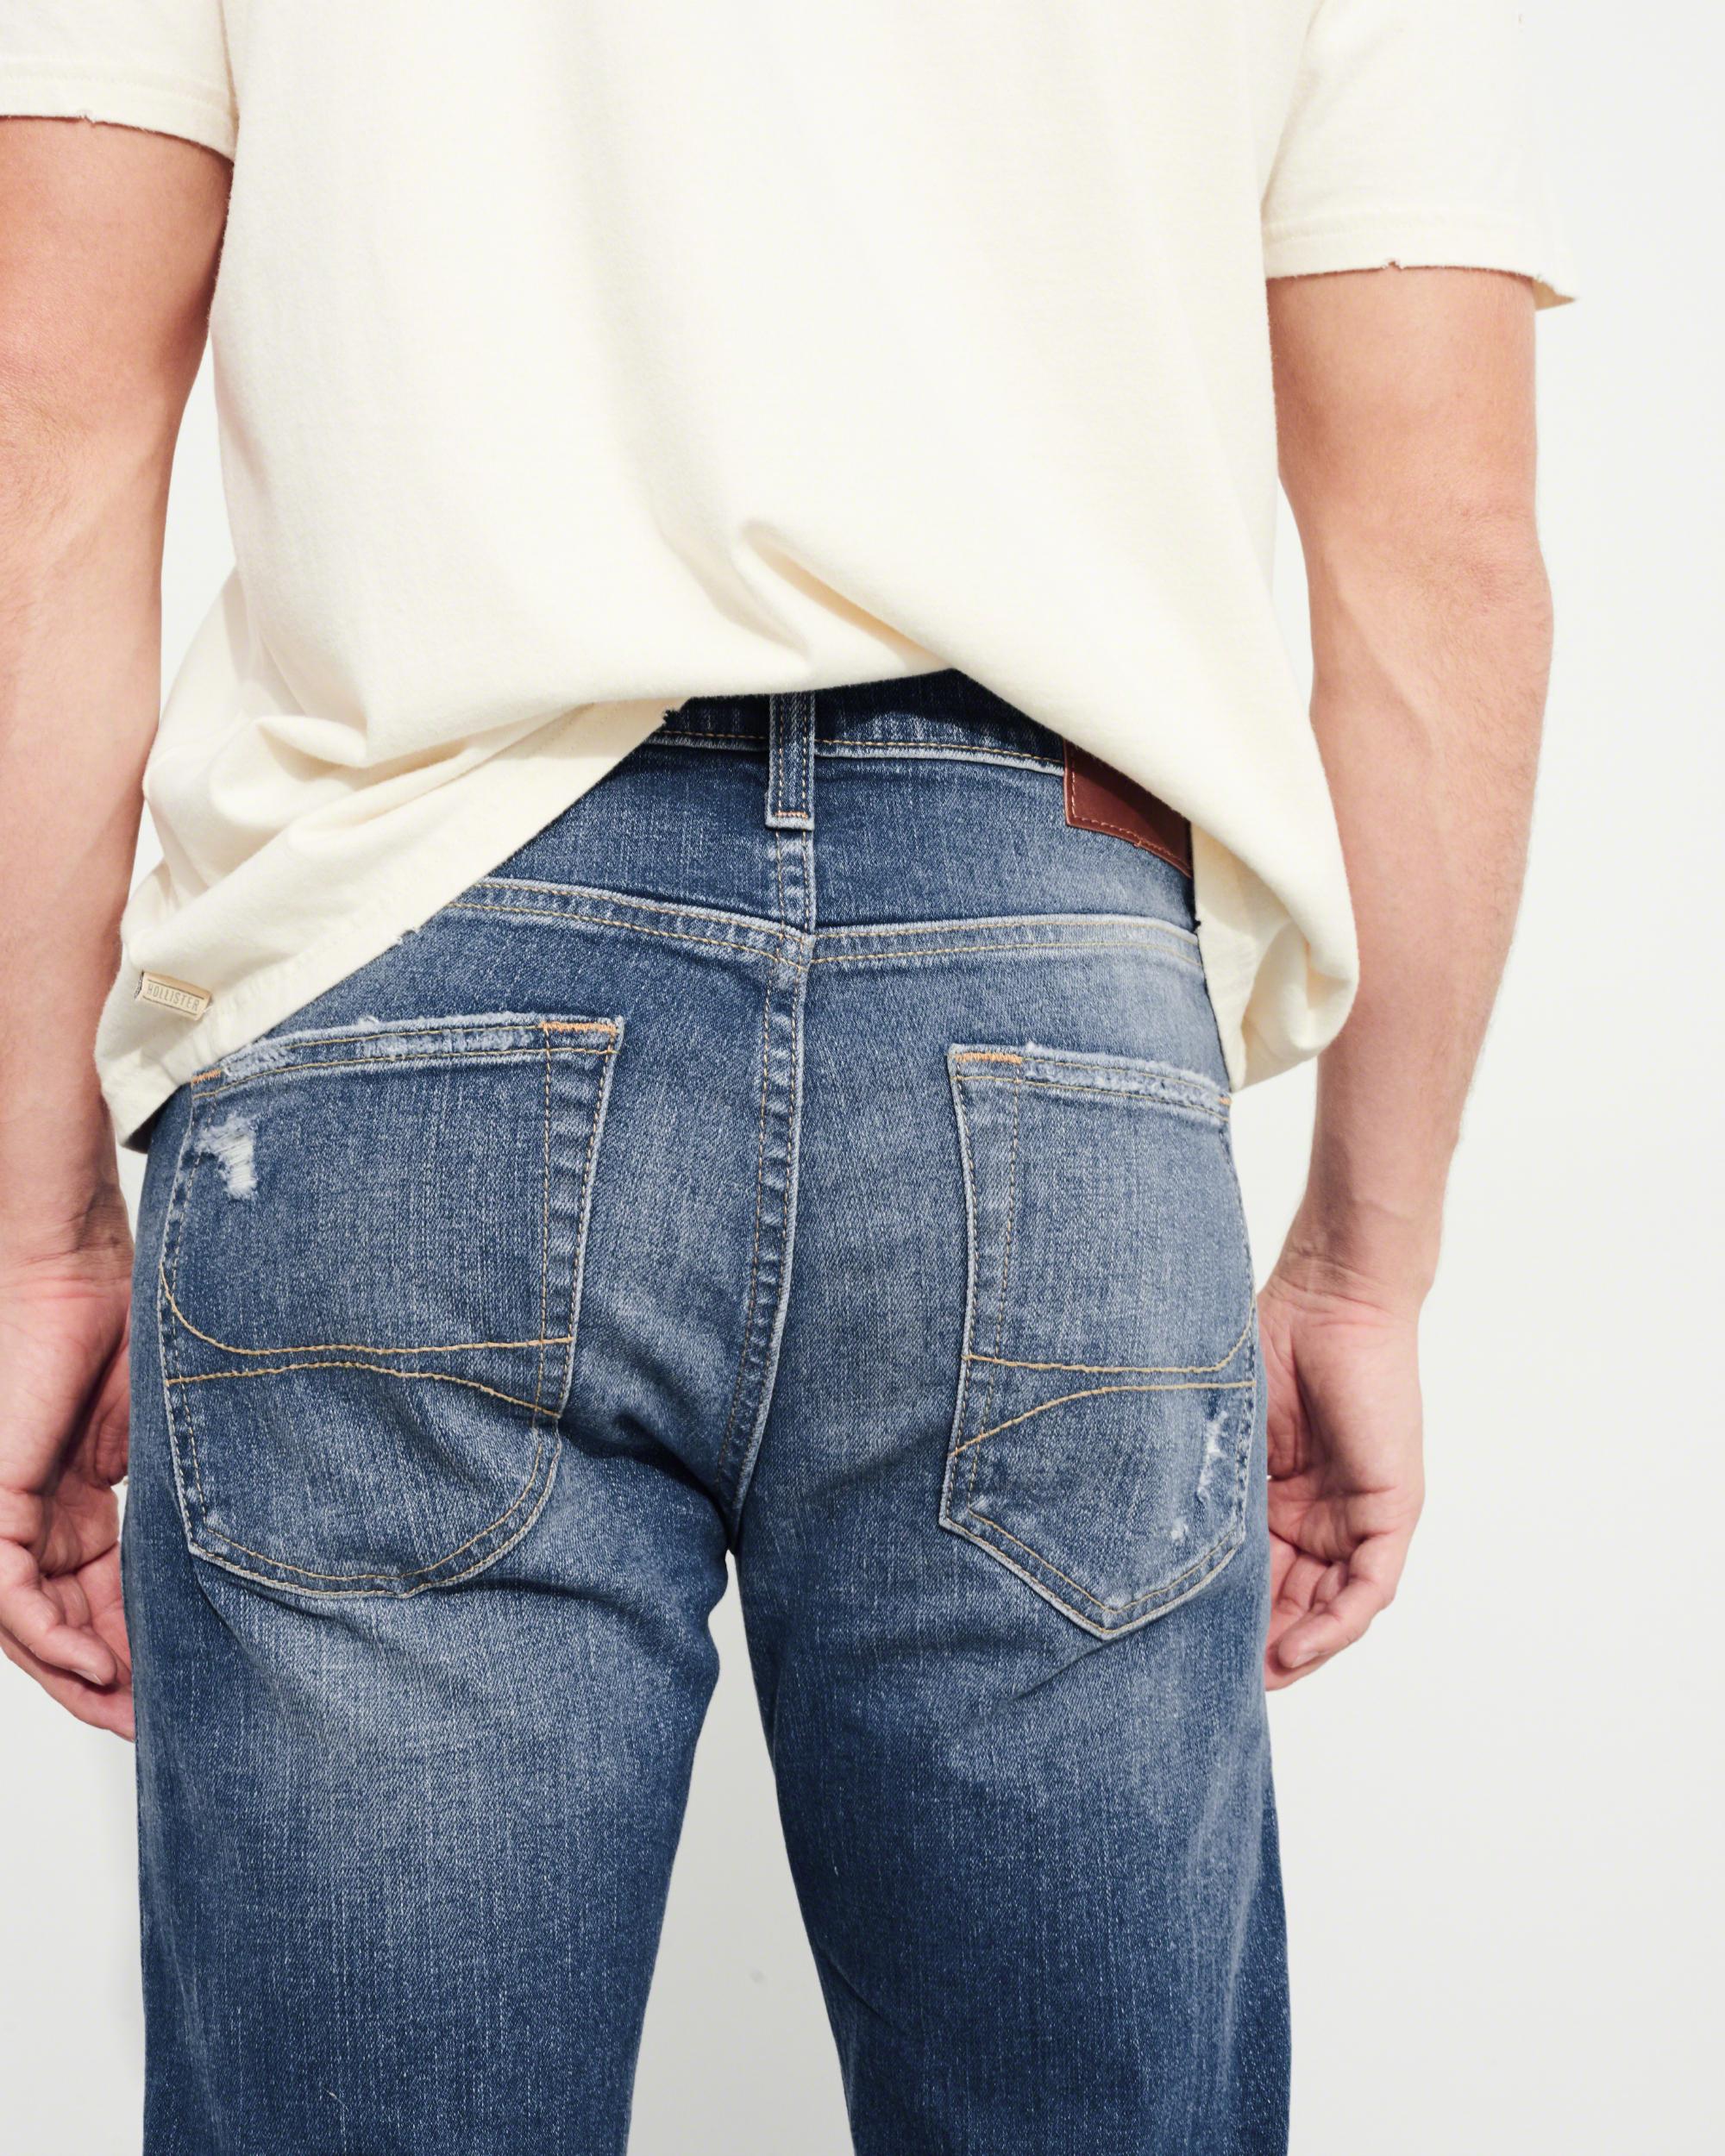 Lyst - Hollister Skinny Jeans in Blue for Men